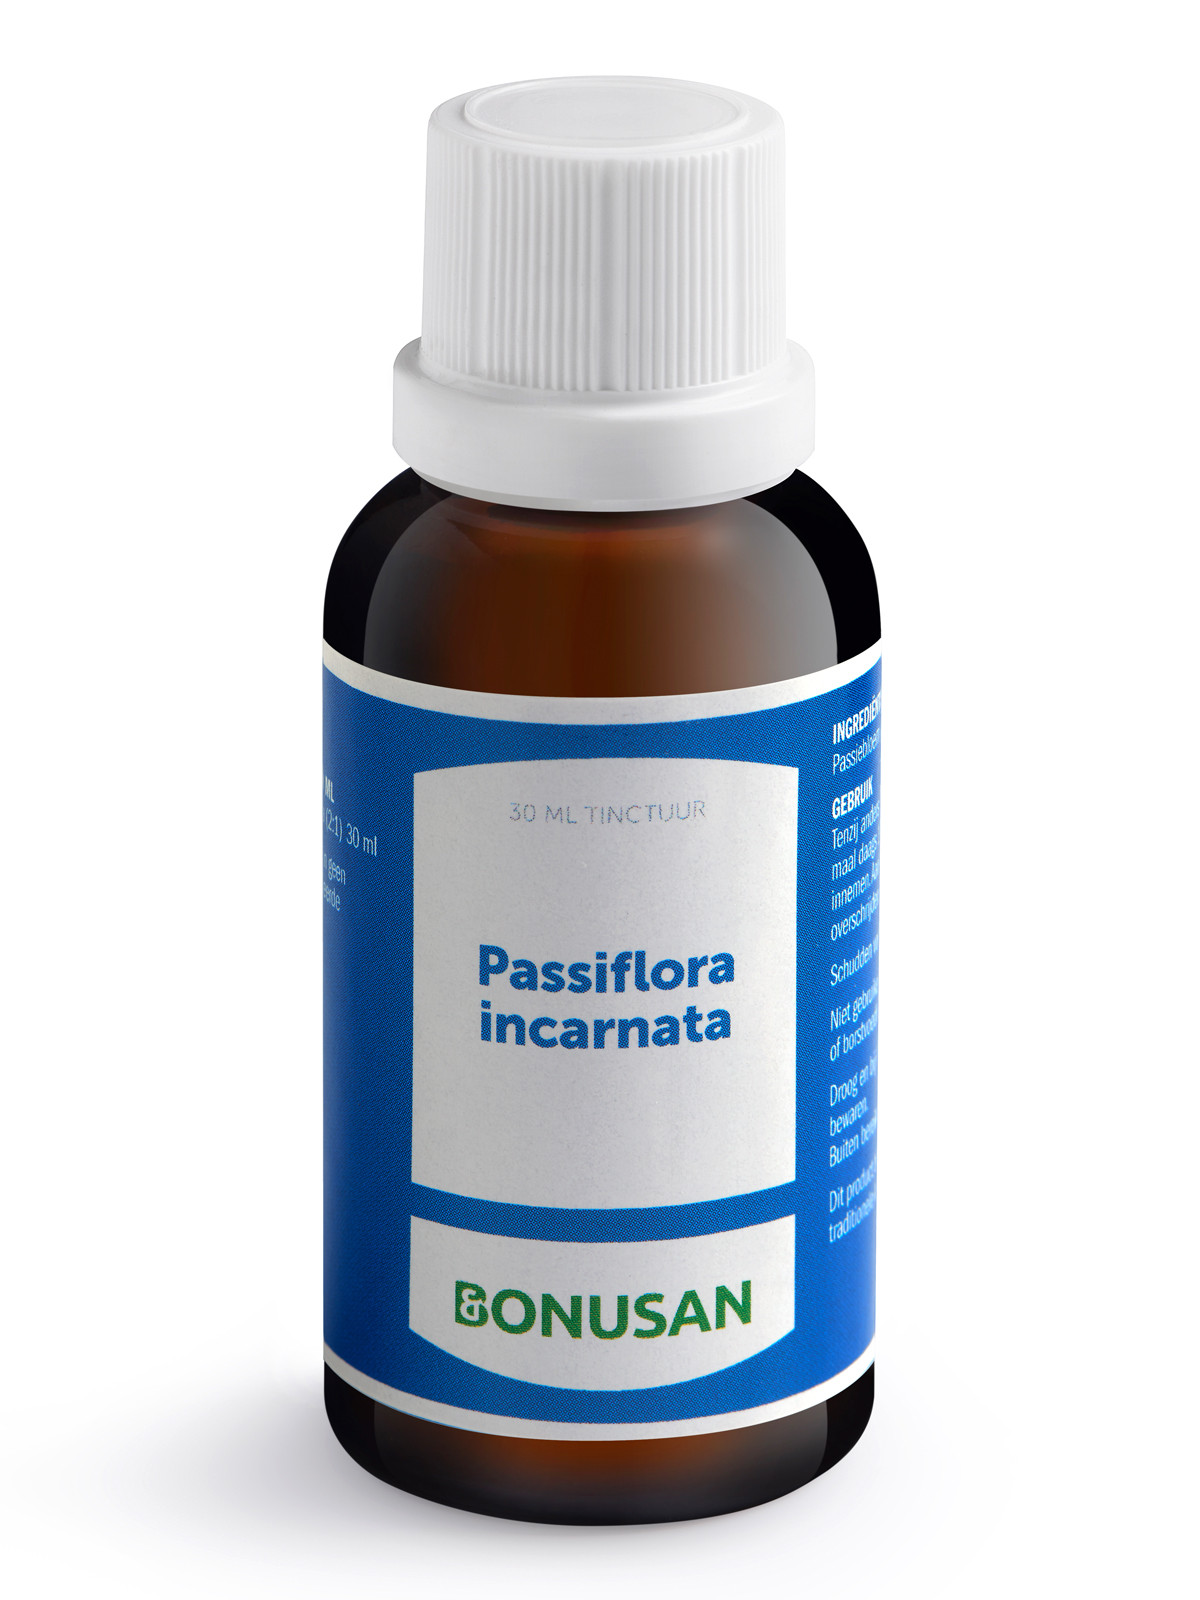 Bonusan - Passiflora incarnata